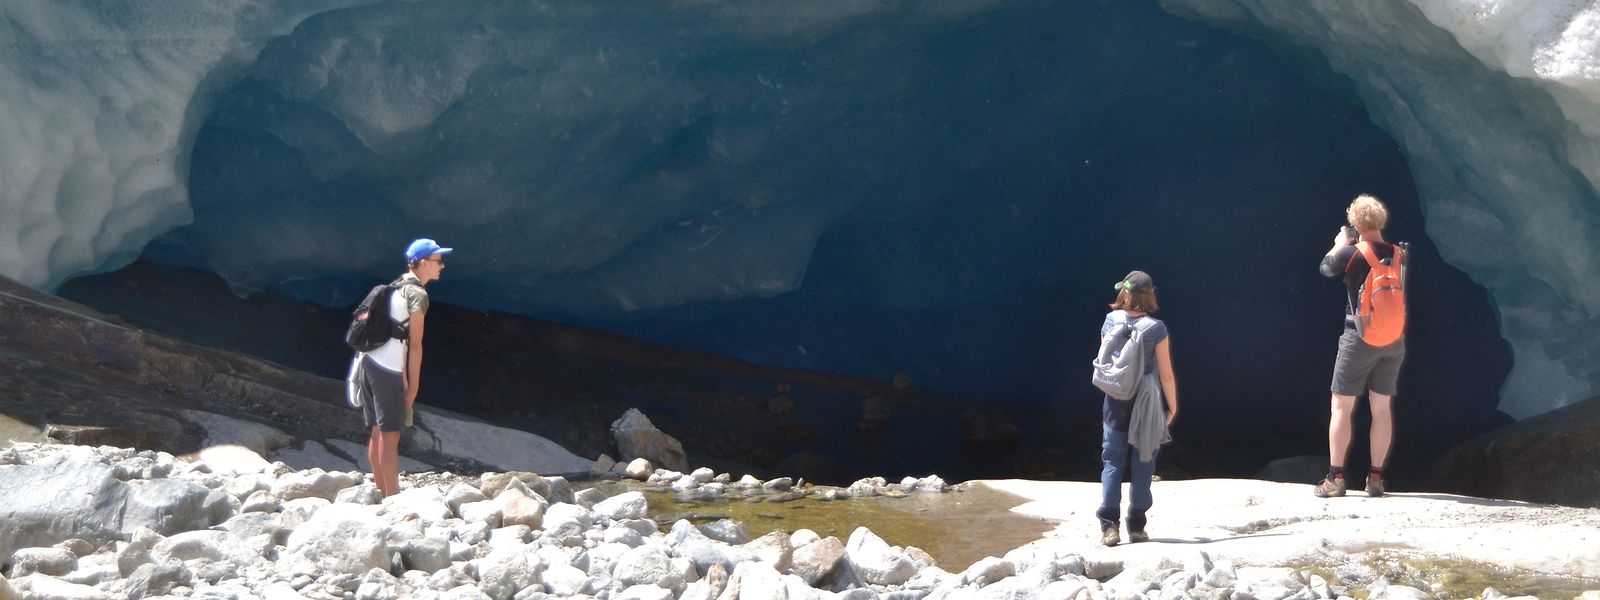 Noch können sich Wanderer an Naturwundern wie dem Aletschgletscher erfreuen.